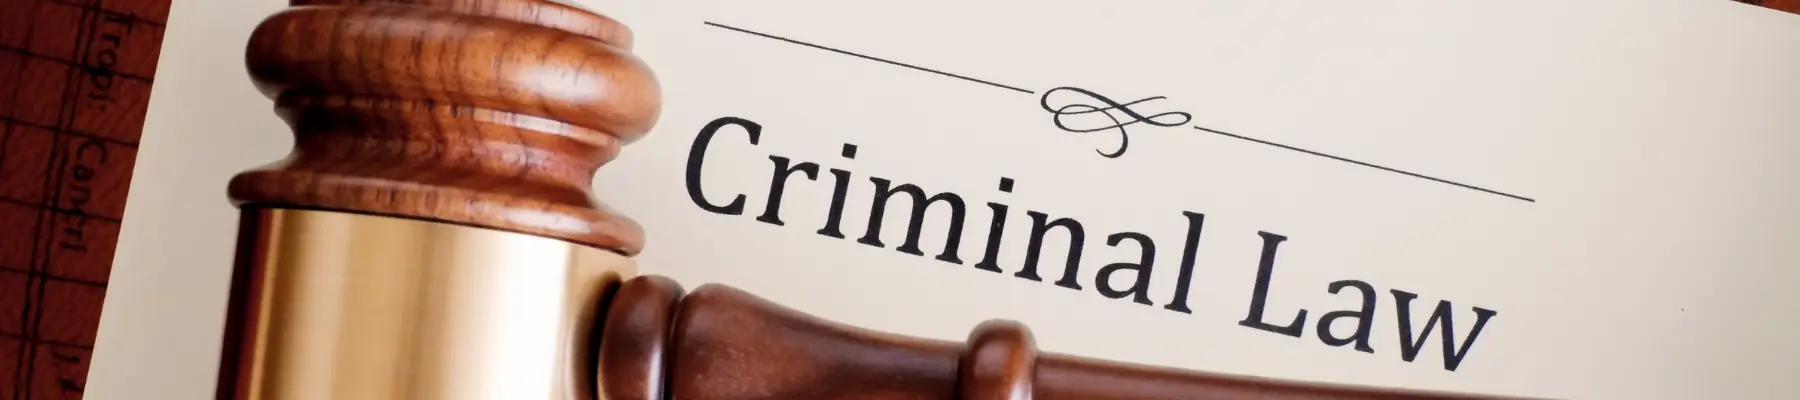 Top Criminal Law Digital Marketing Agencies